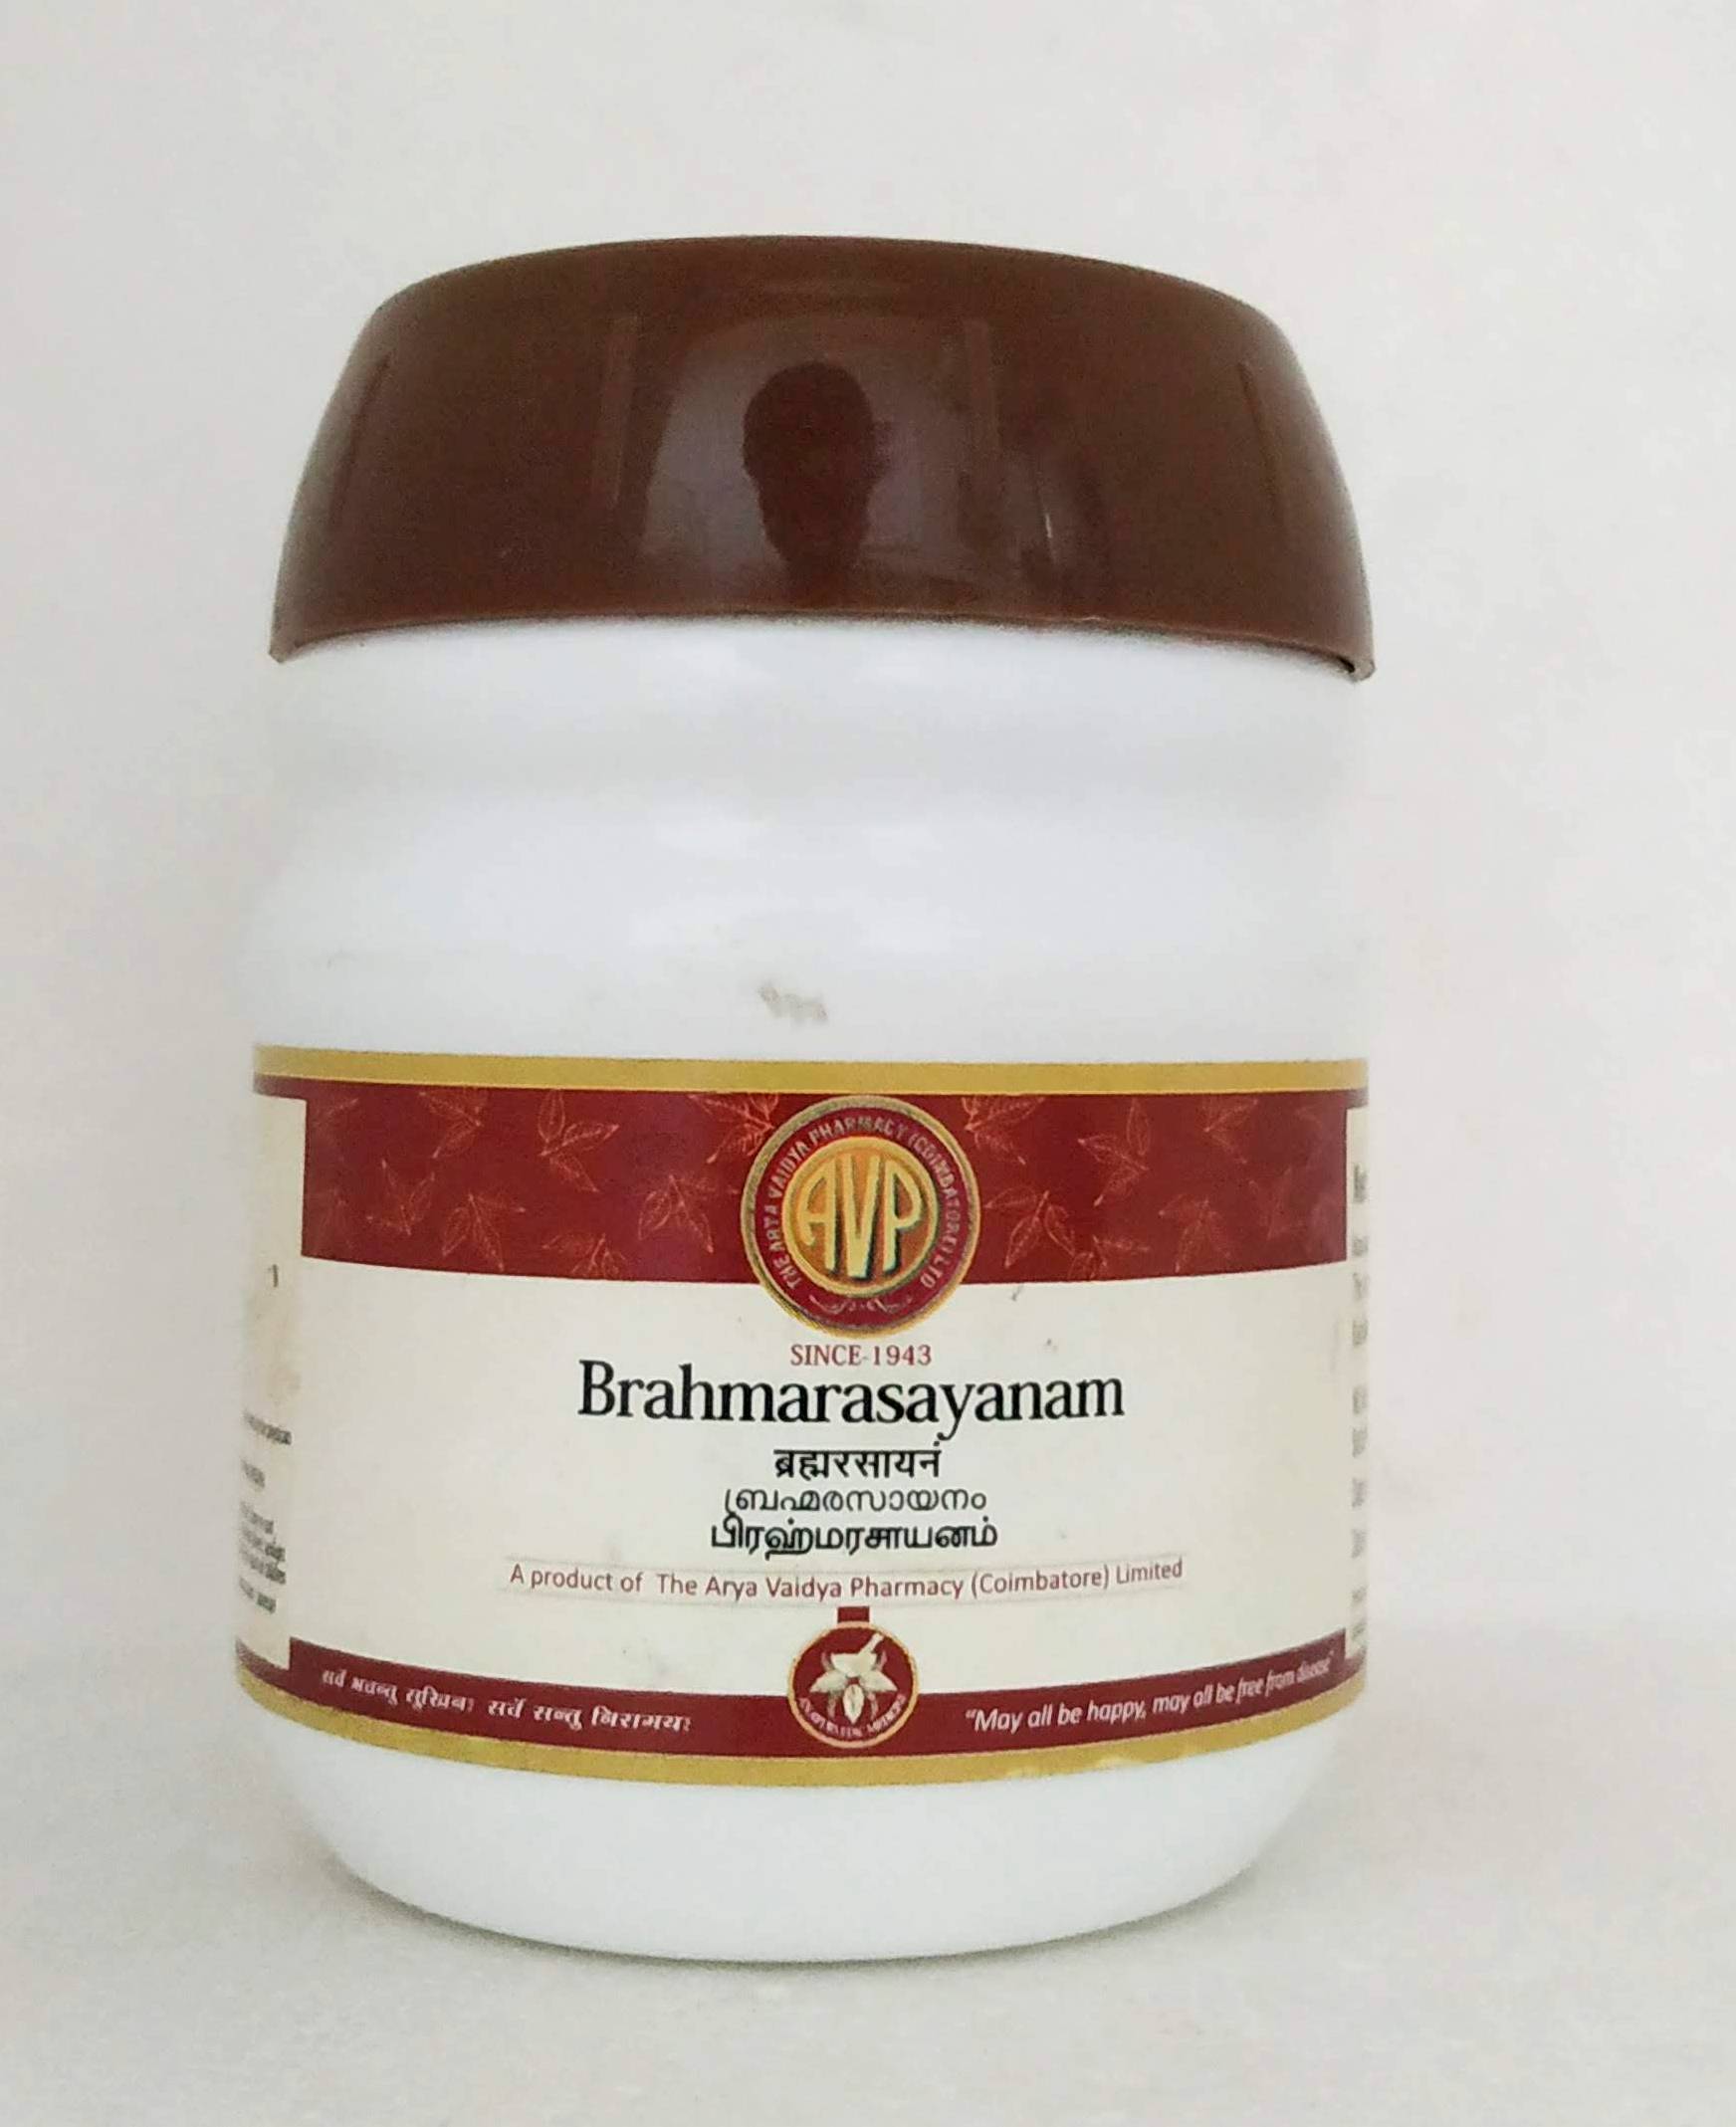 Shop Brahma rasayanam 200gm at price 81.00 from AVP Online - Ayush Care